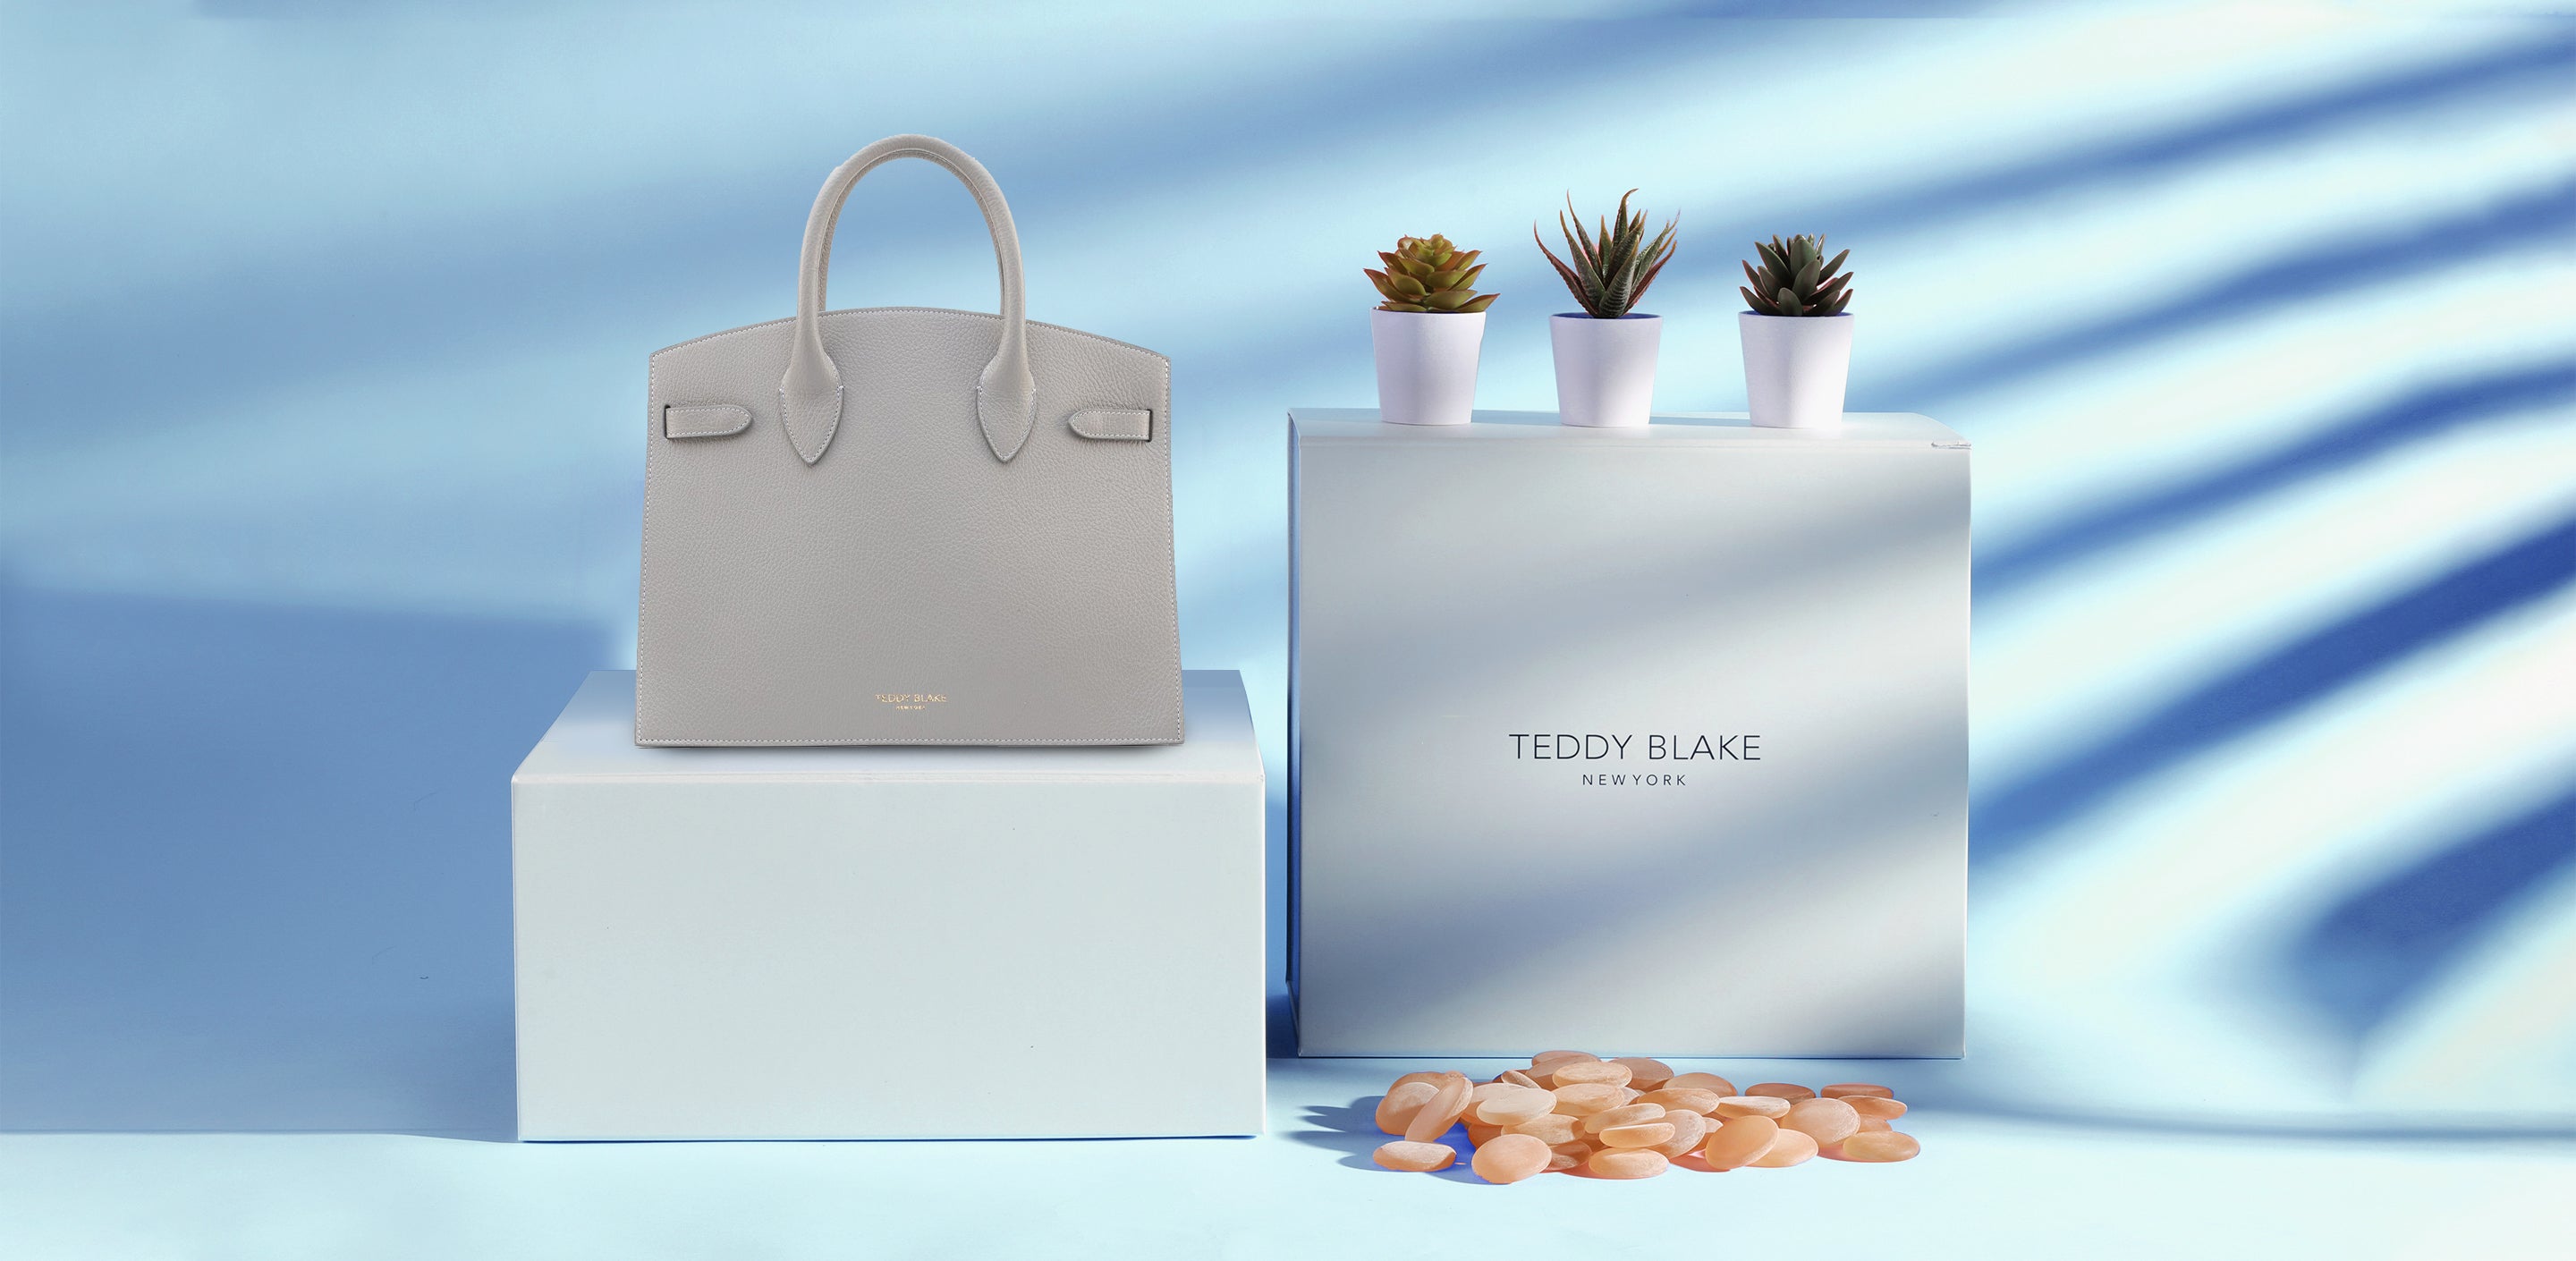 Teddy Blake Luxury Handbag Unboxing